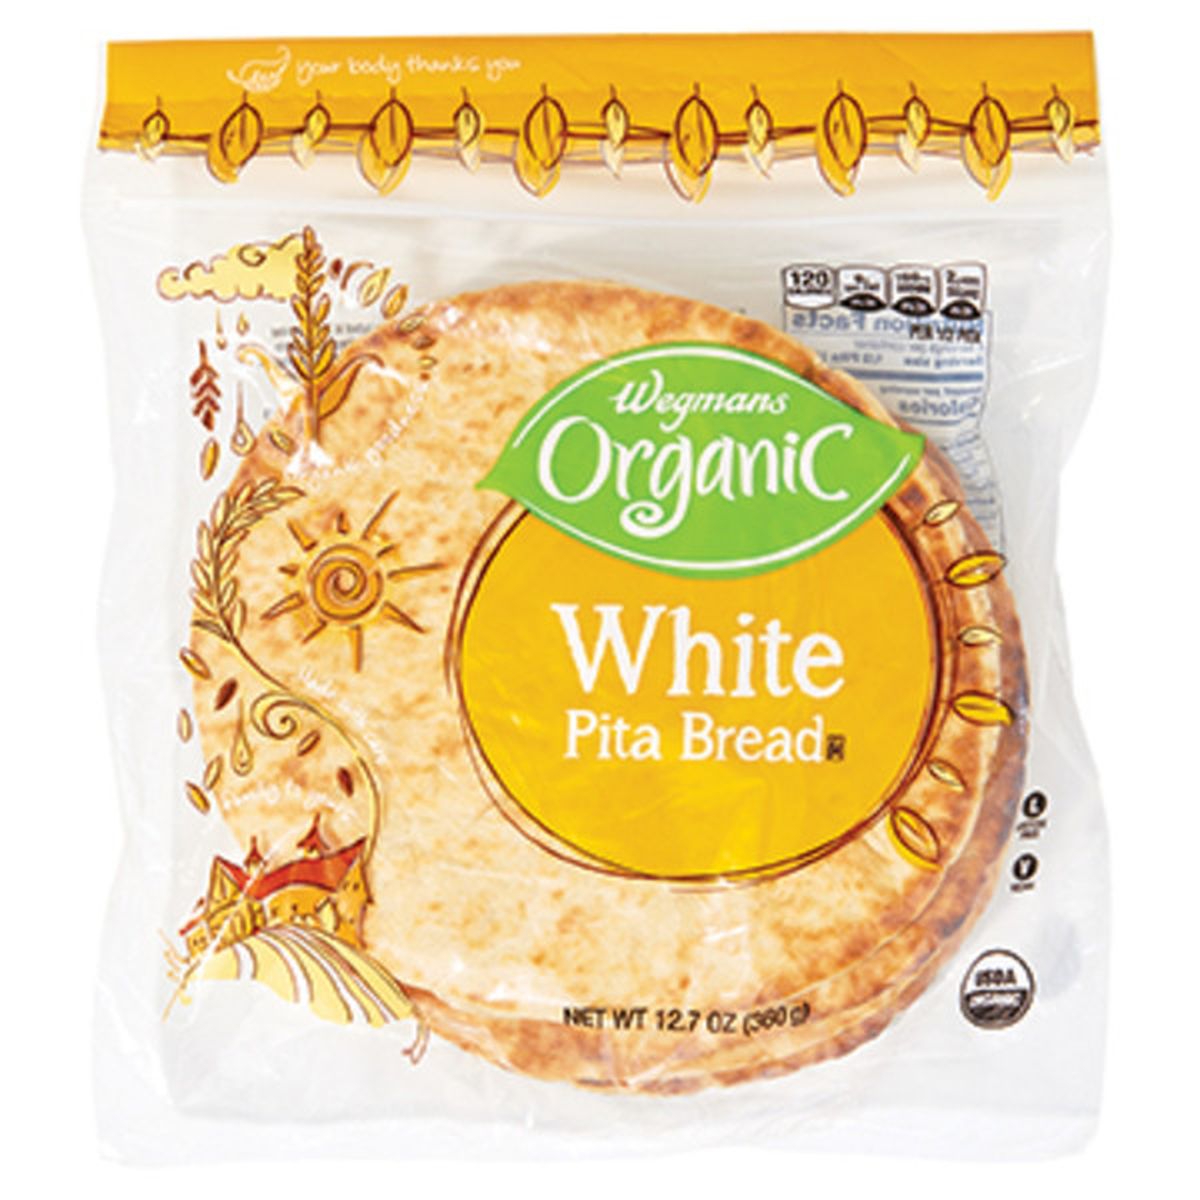 Calories in Wegmans Organic White Pita Bread